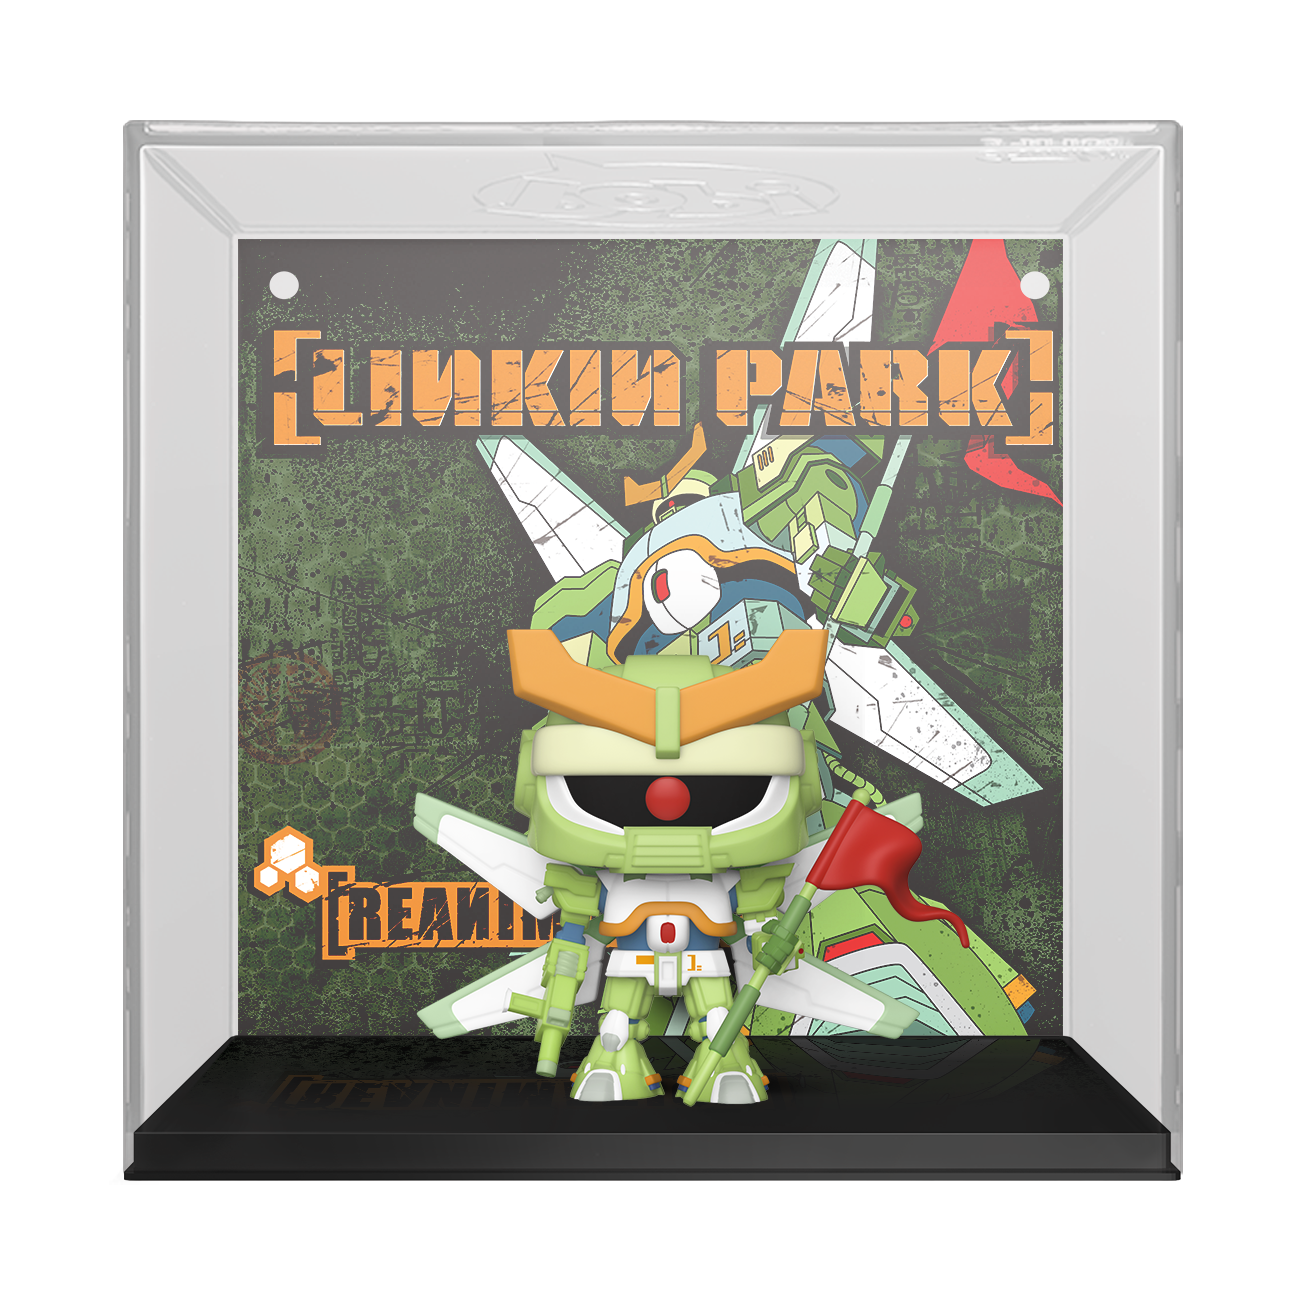 Reanimation Robot Funko Pop! Album